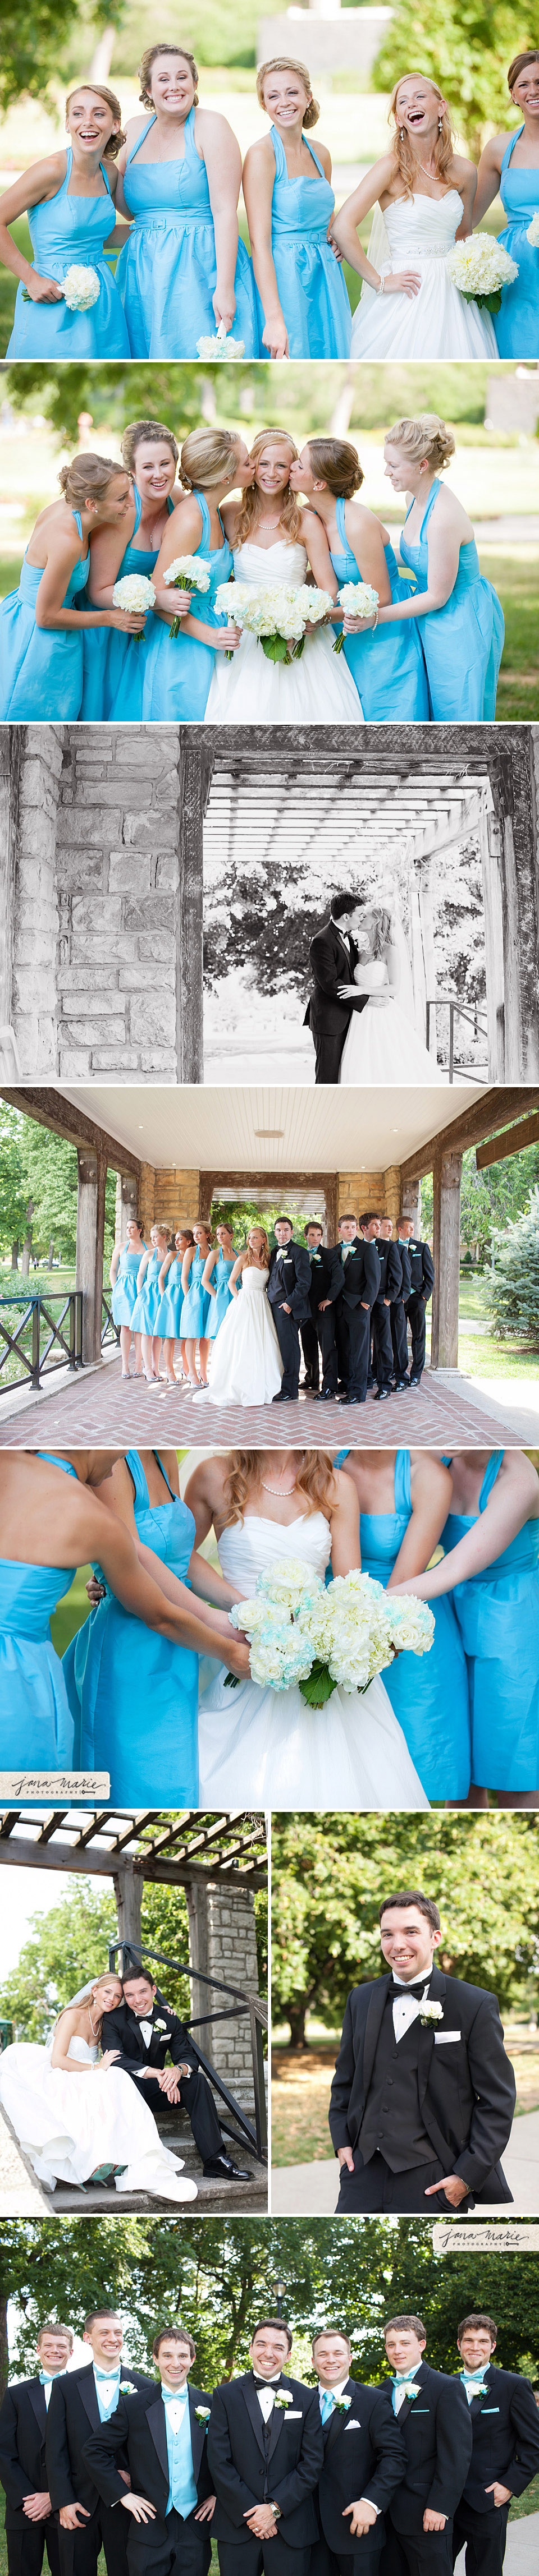 Loose Park Kansas City, KC wedding photography, bouquets, Blue heels, love, celebrations